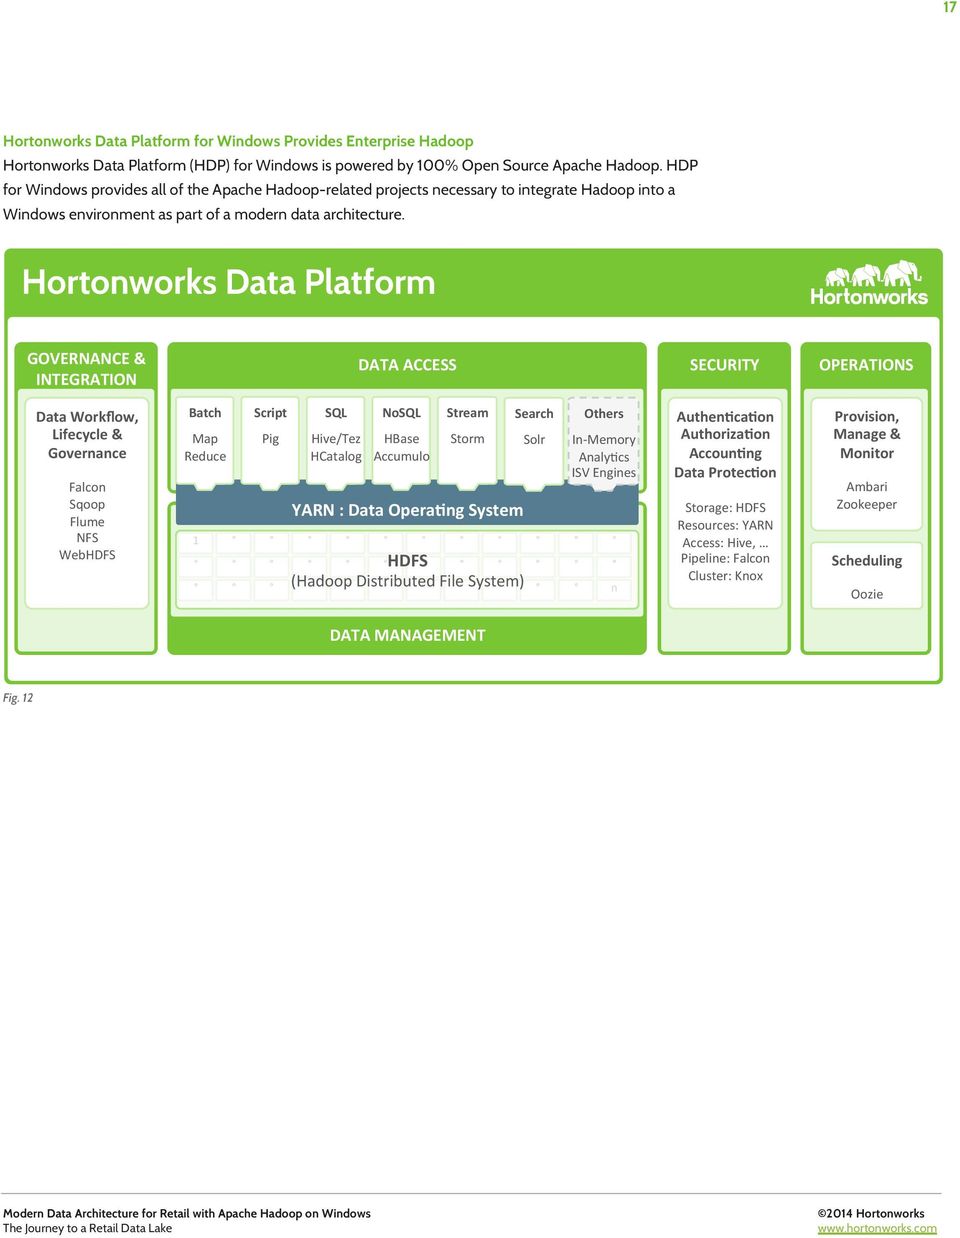 Hortonworks Data Platform GOVERNANCE& INTEGRATION DATAACCESS SECURITY OPERATIONS DataWorkflow, Lifecycle& Governance Falcon Sqoop Flume NFS WebHDFS Batch Map Reduce Script Pig SQL Hive/Tez HCatalog